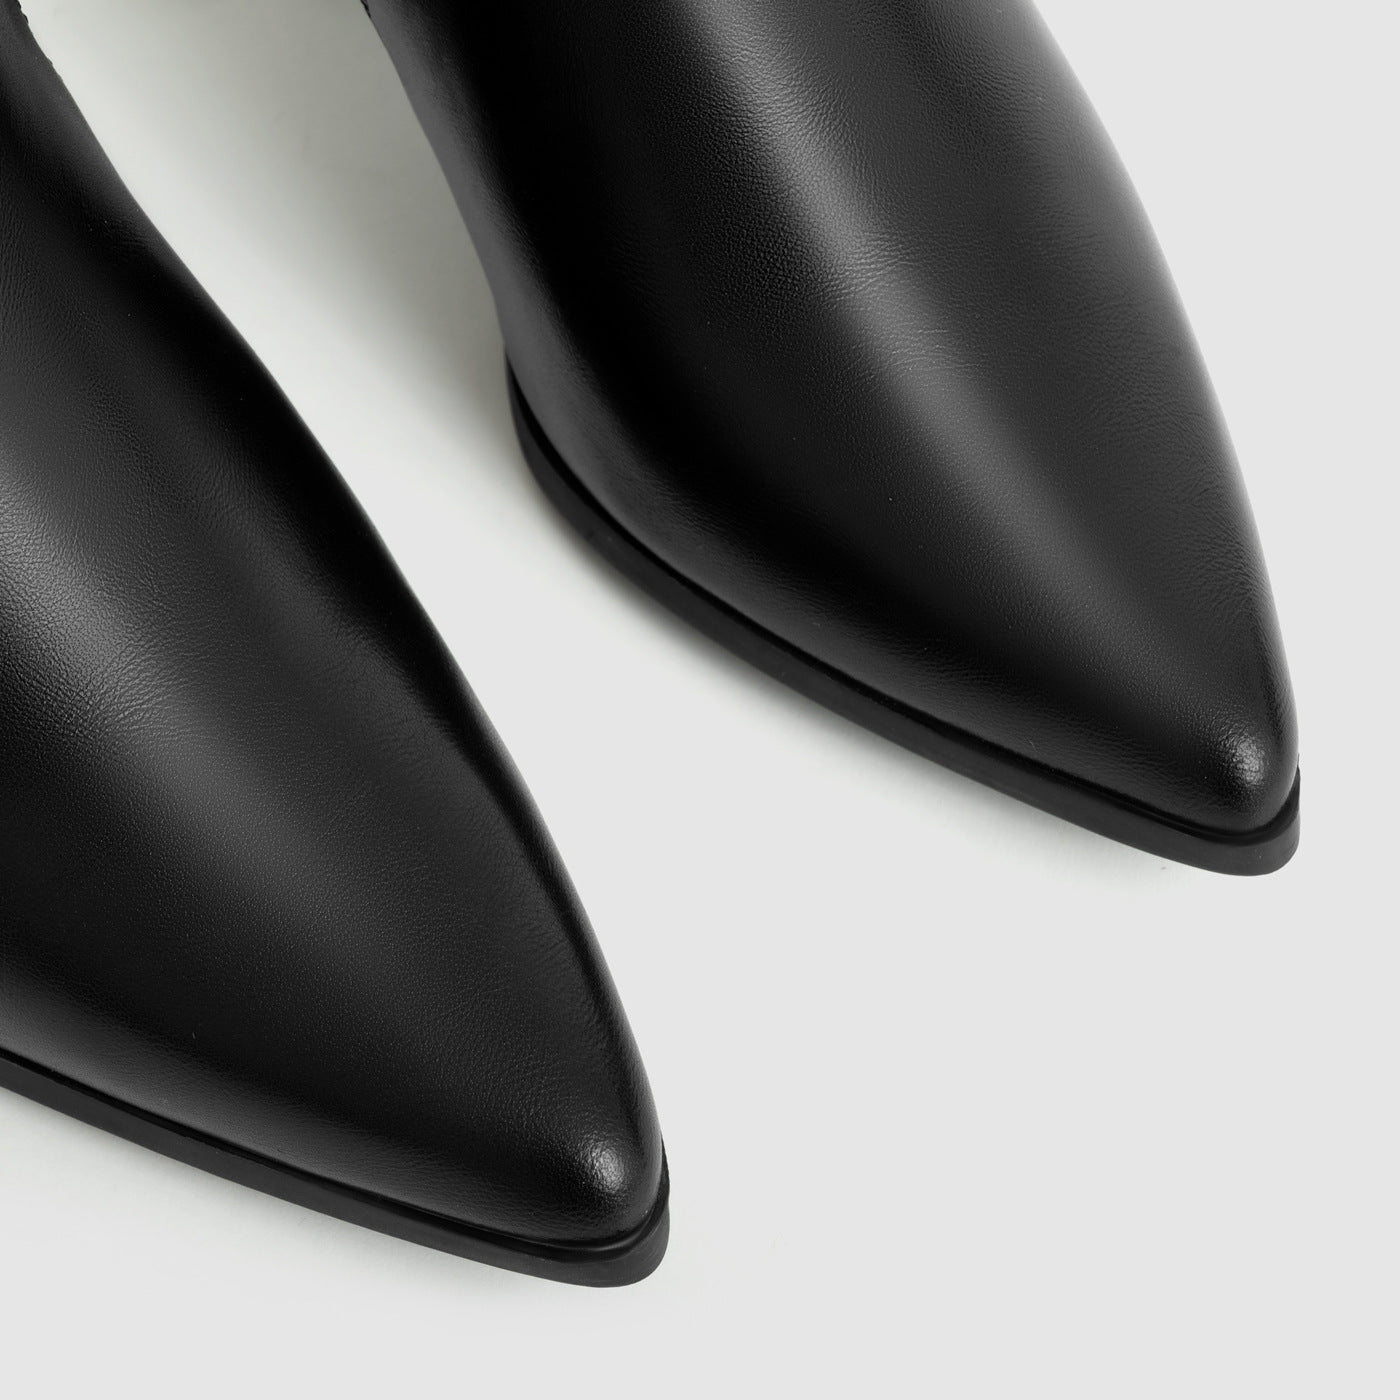 Vorioal Minimalist Elegant Chelsea Boots